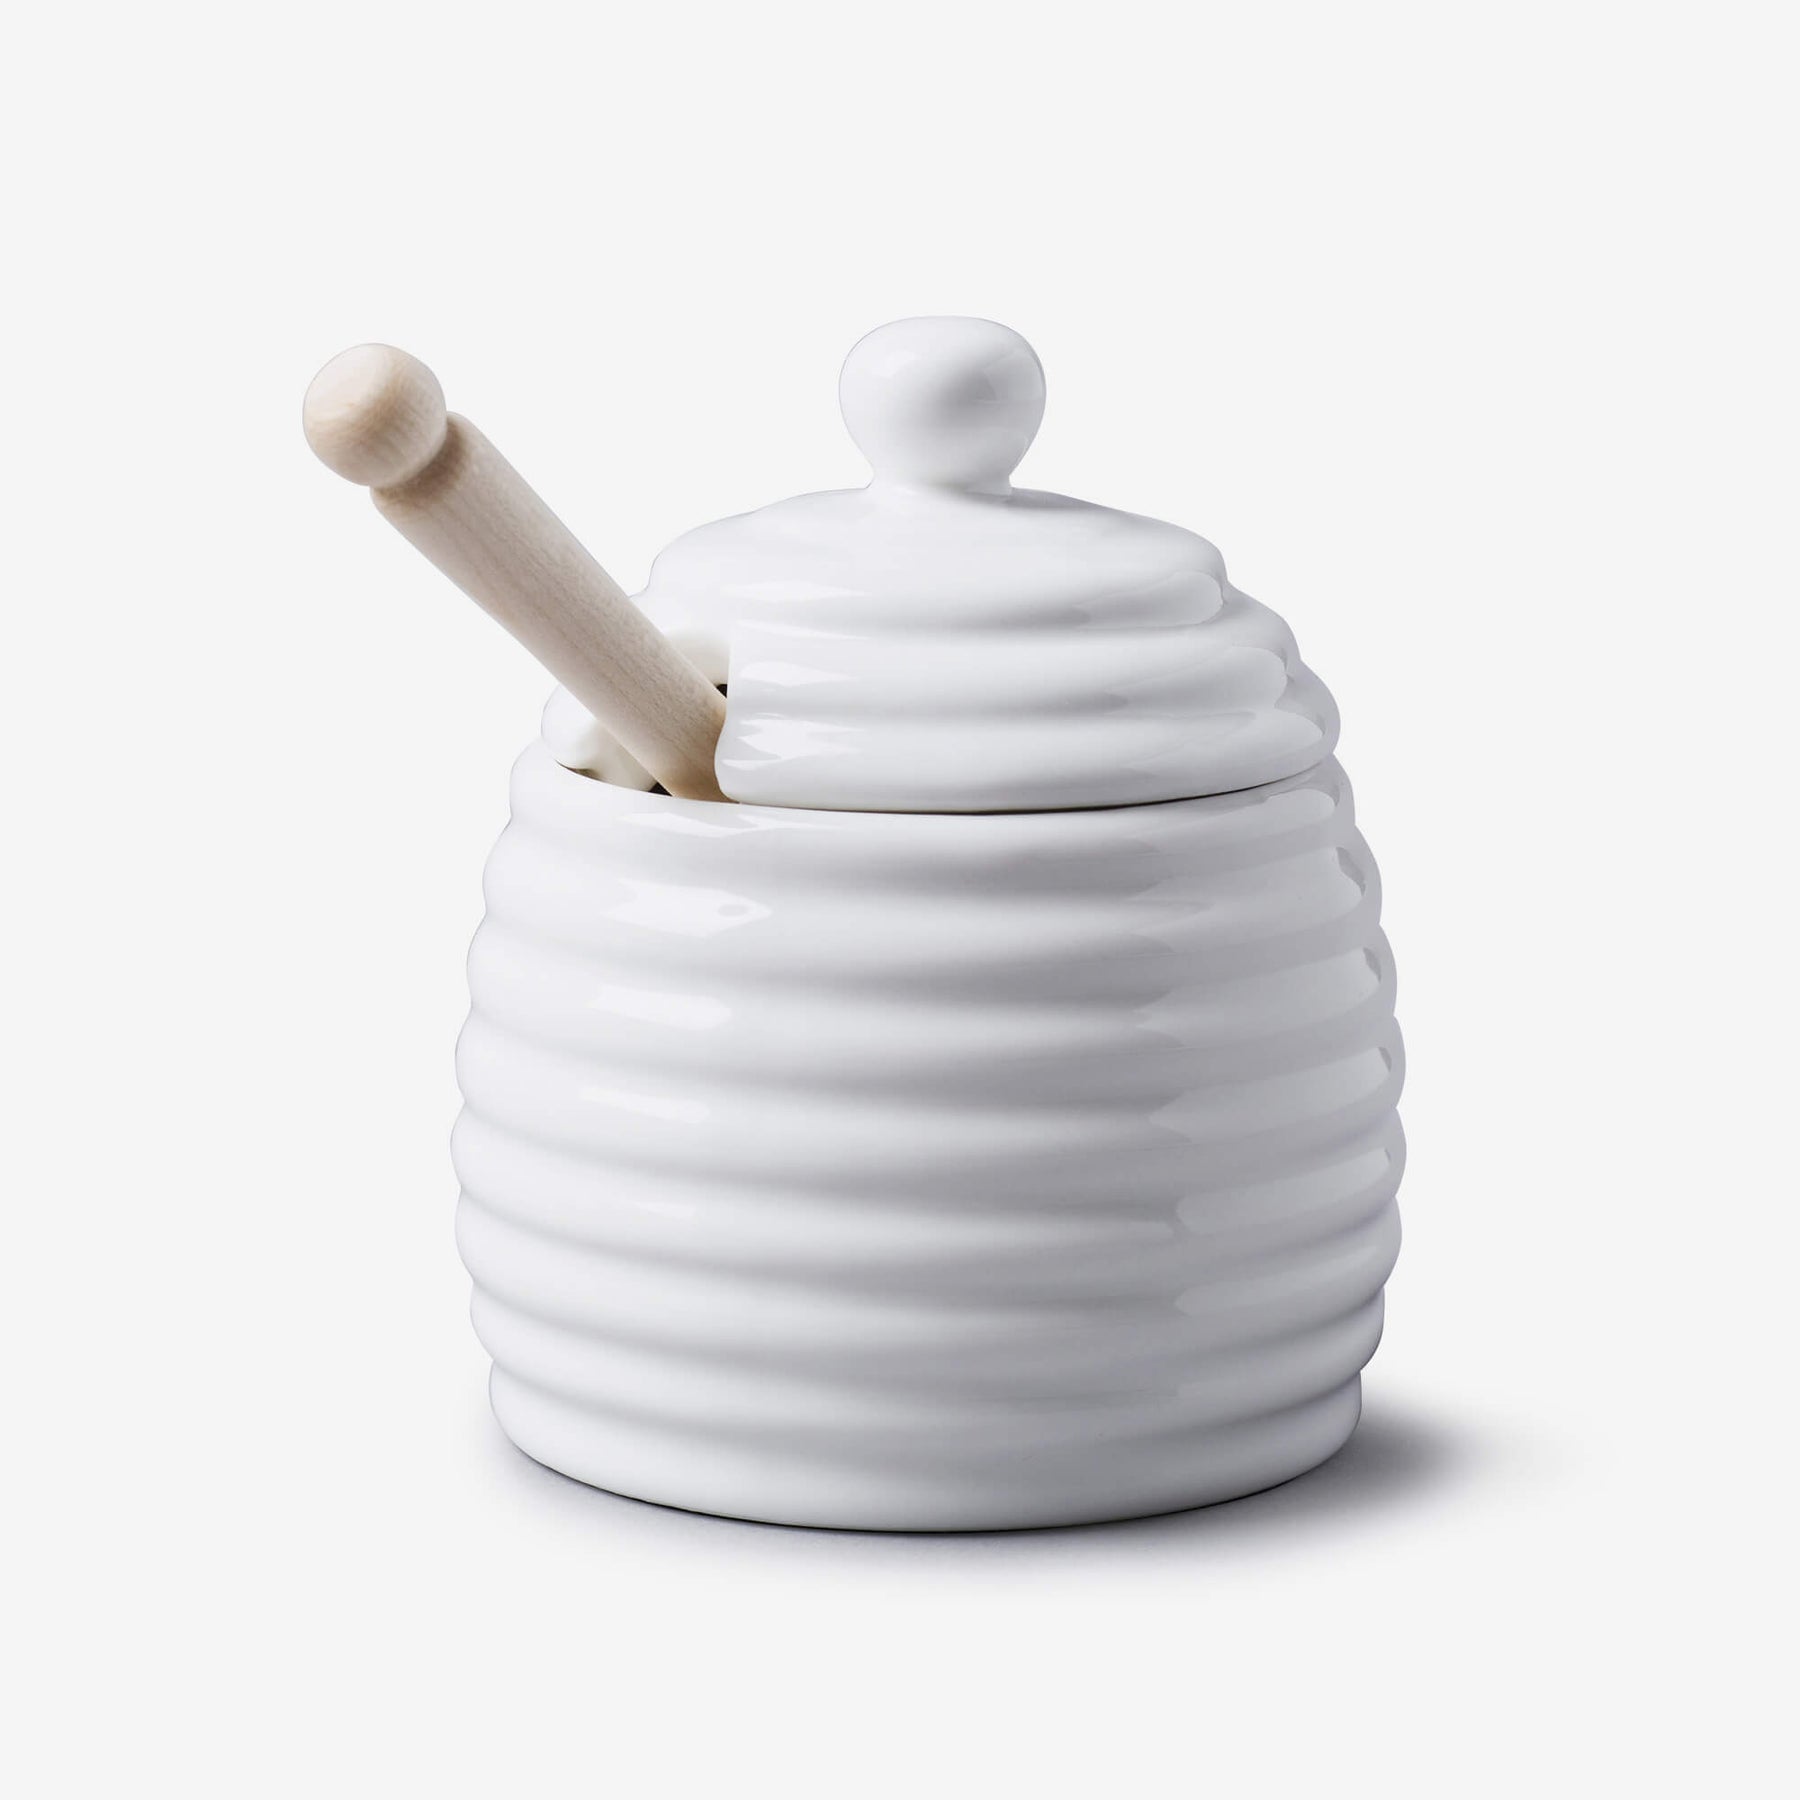 Porcelain Honey Pot with Wooden Dipper